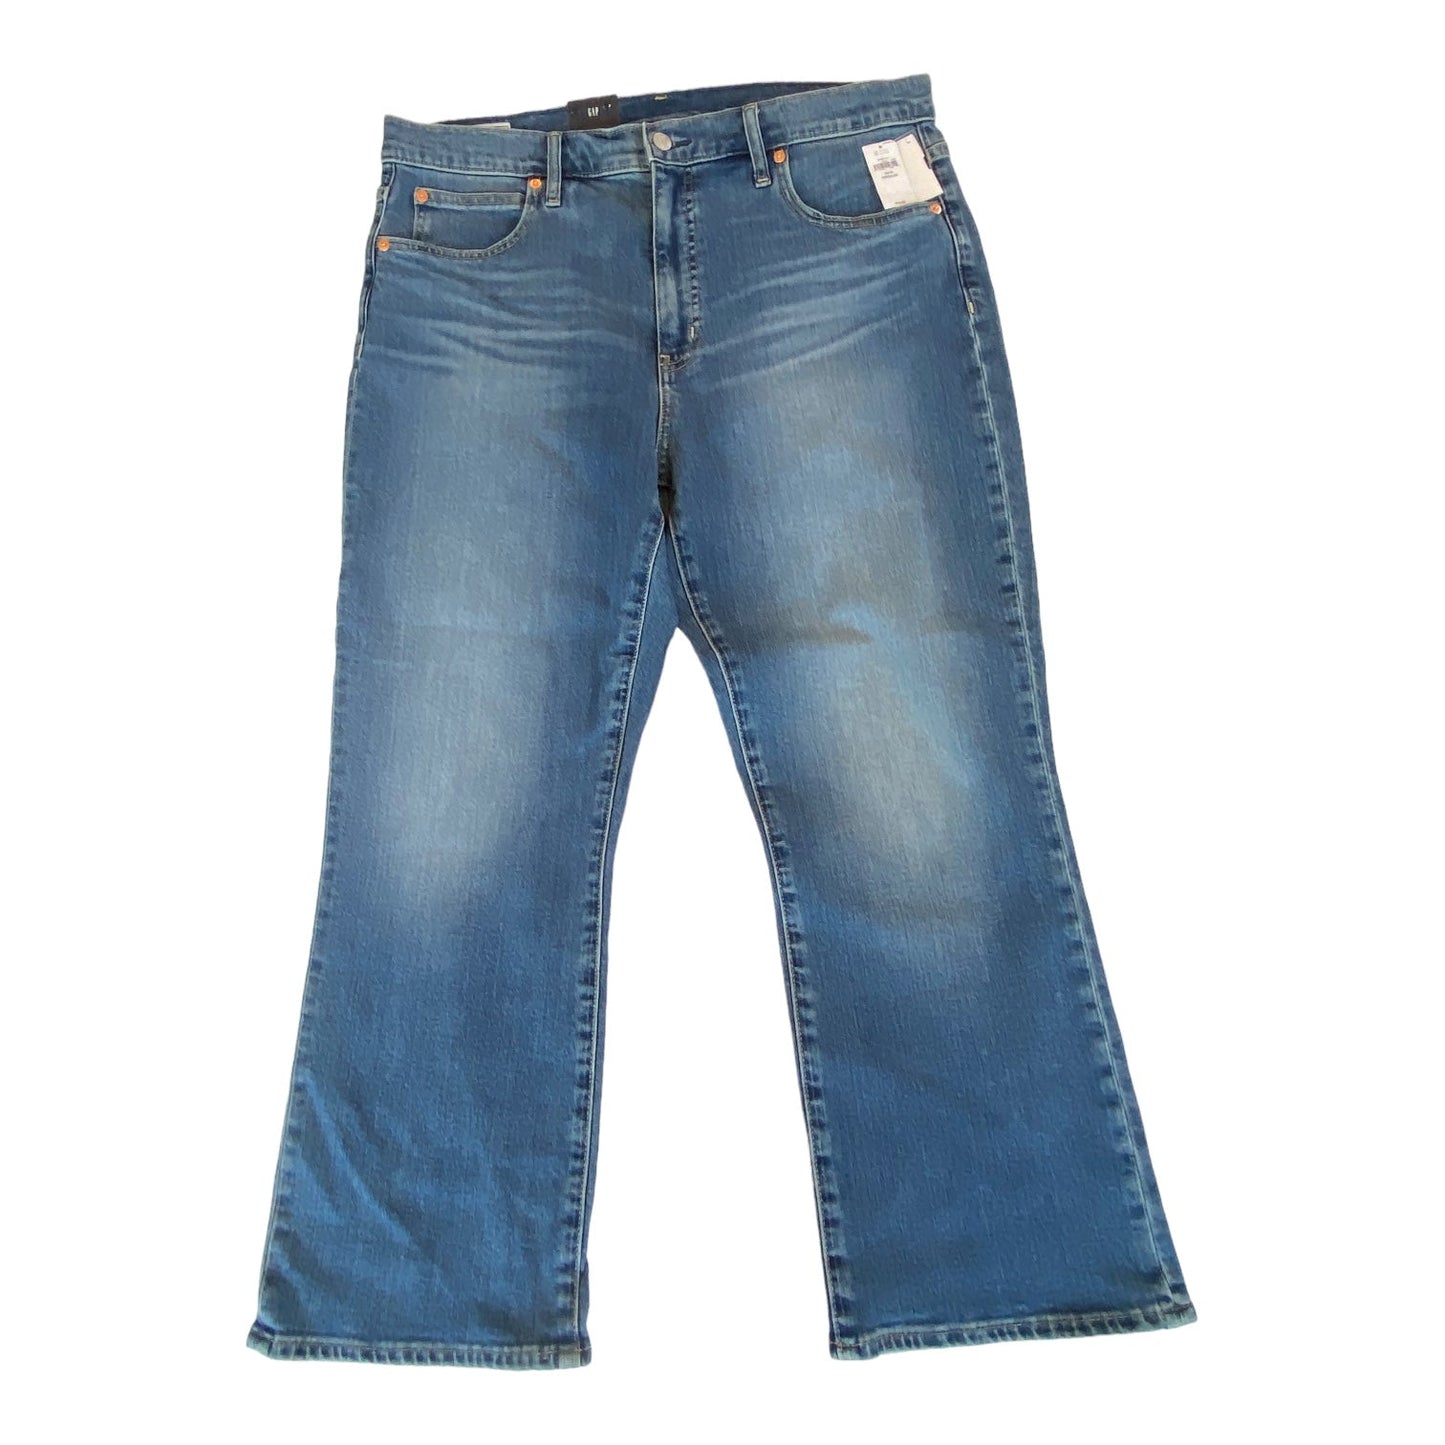 Blue Denim Jeans Skinny Gap, Size 16